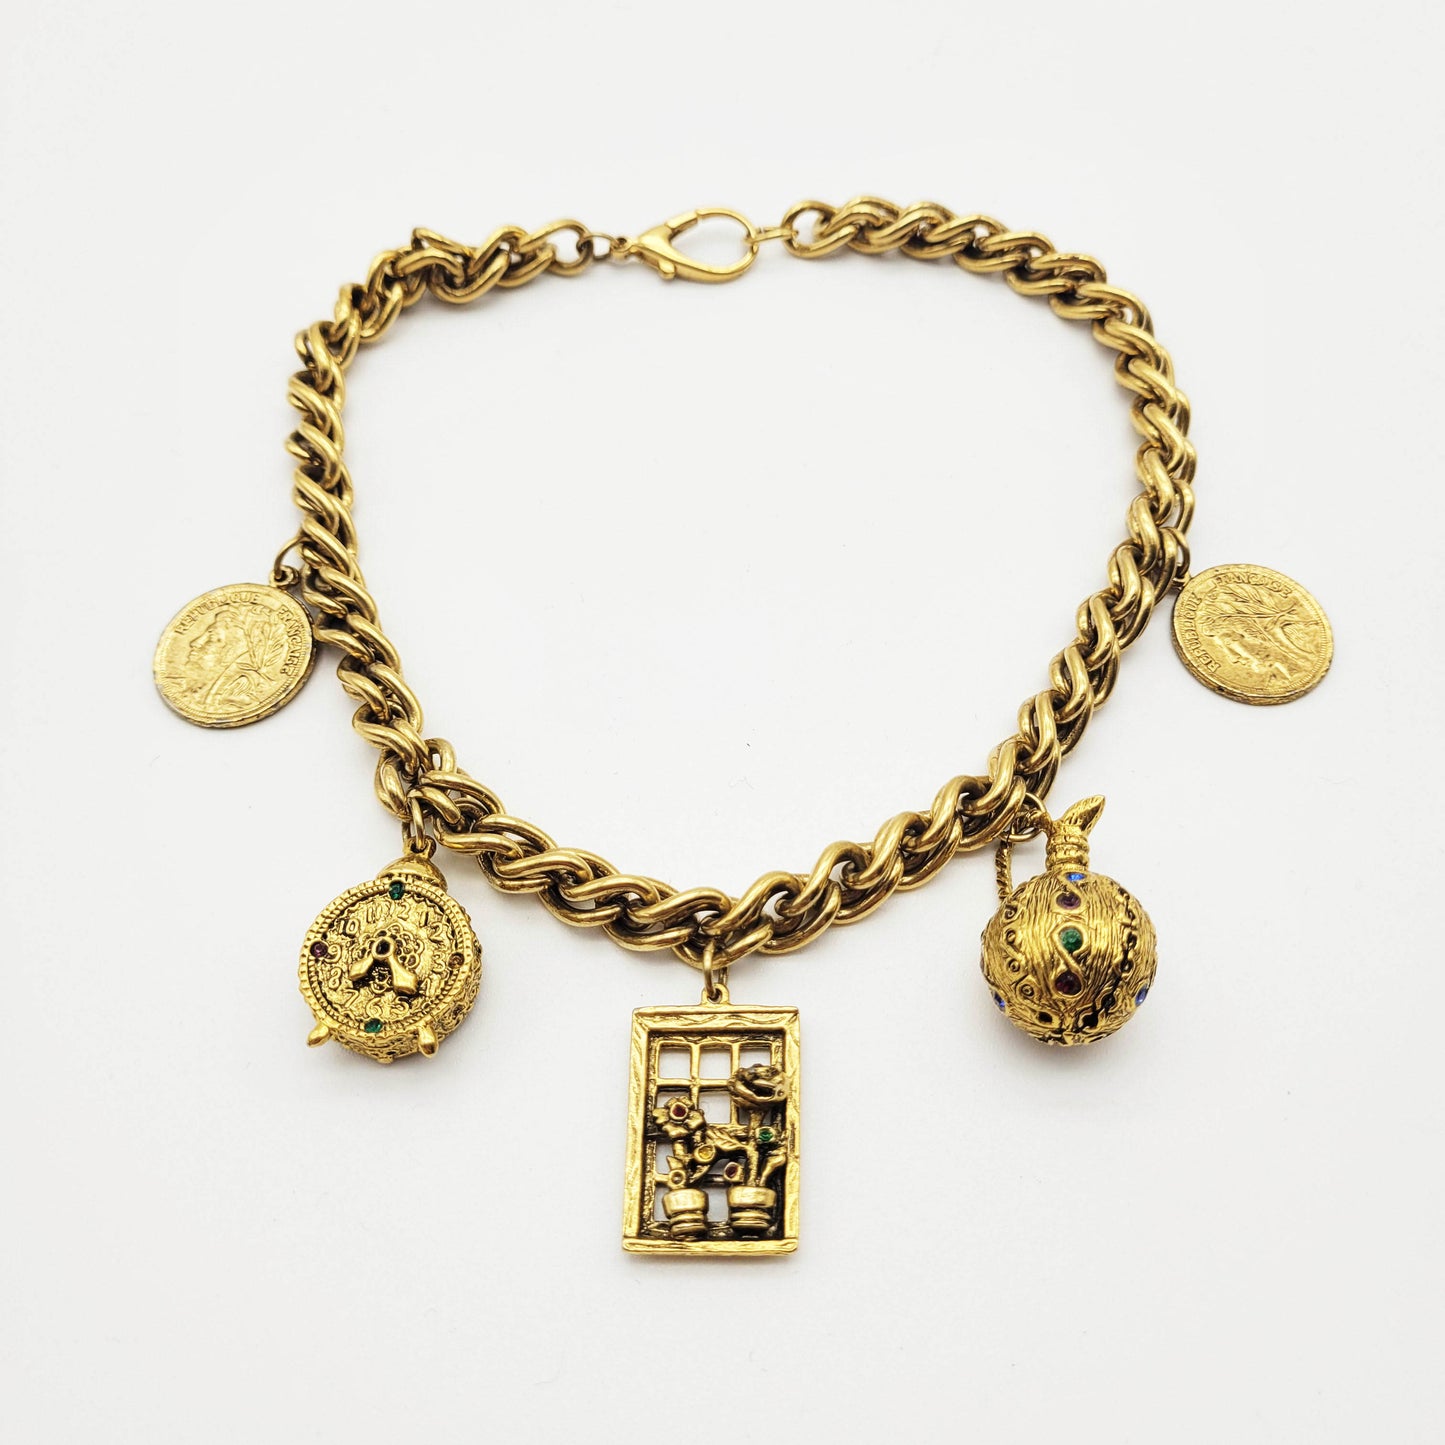 Vintage goldtone chain necklace